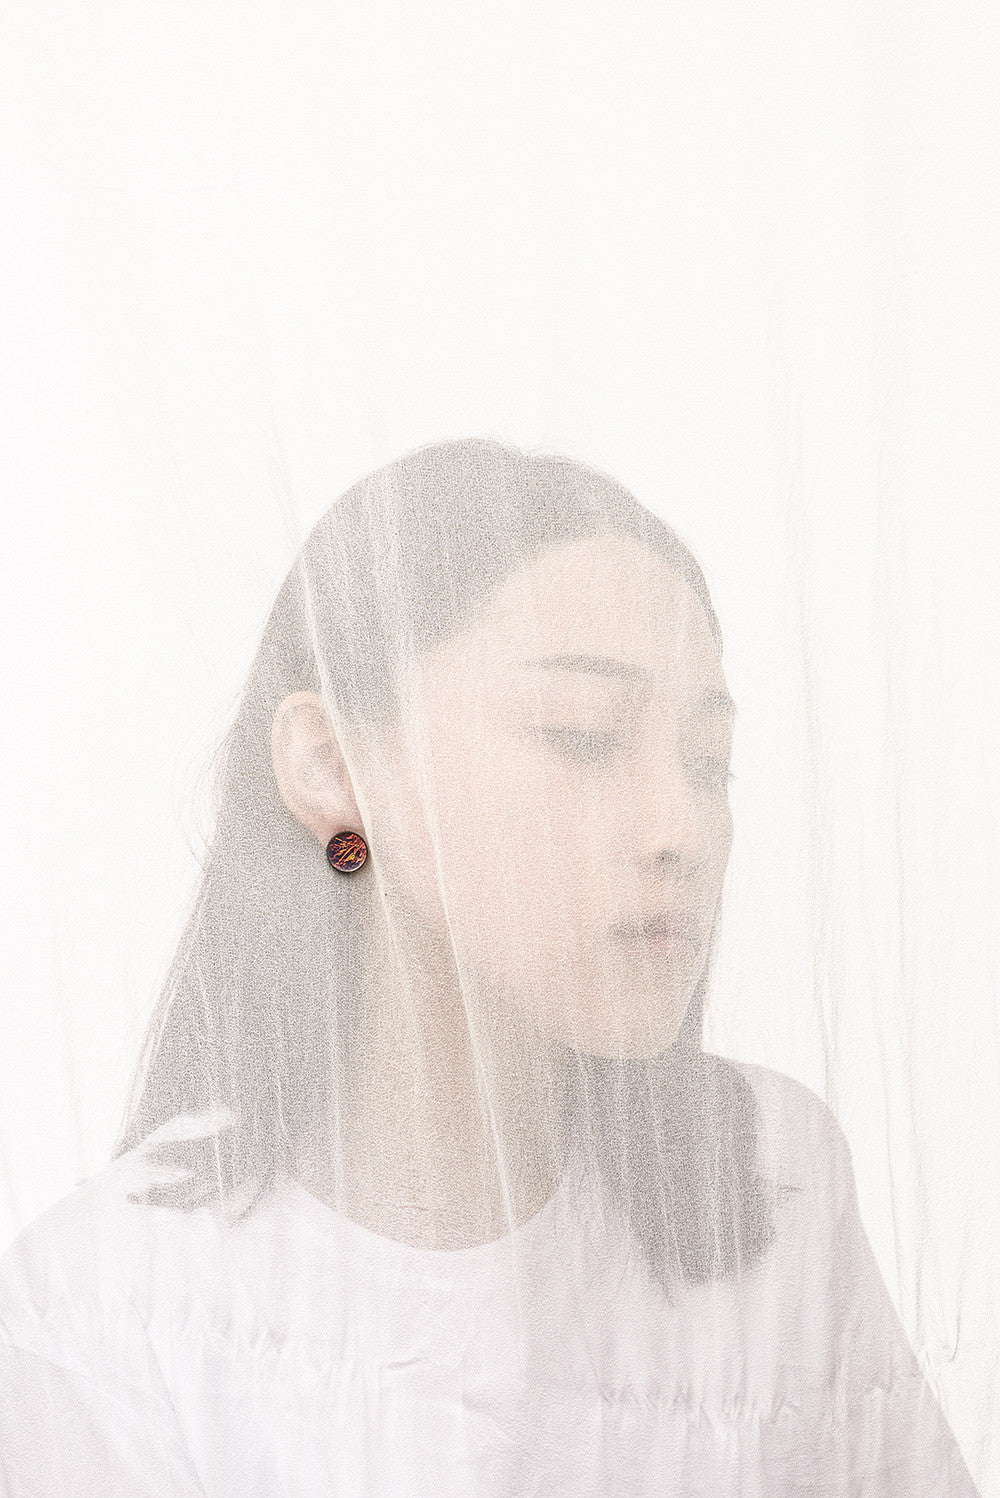 Nebula Stud Earrings - Sol - Aisling Chou Studio